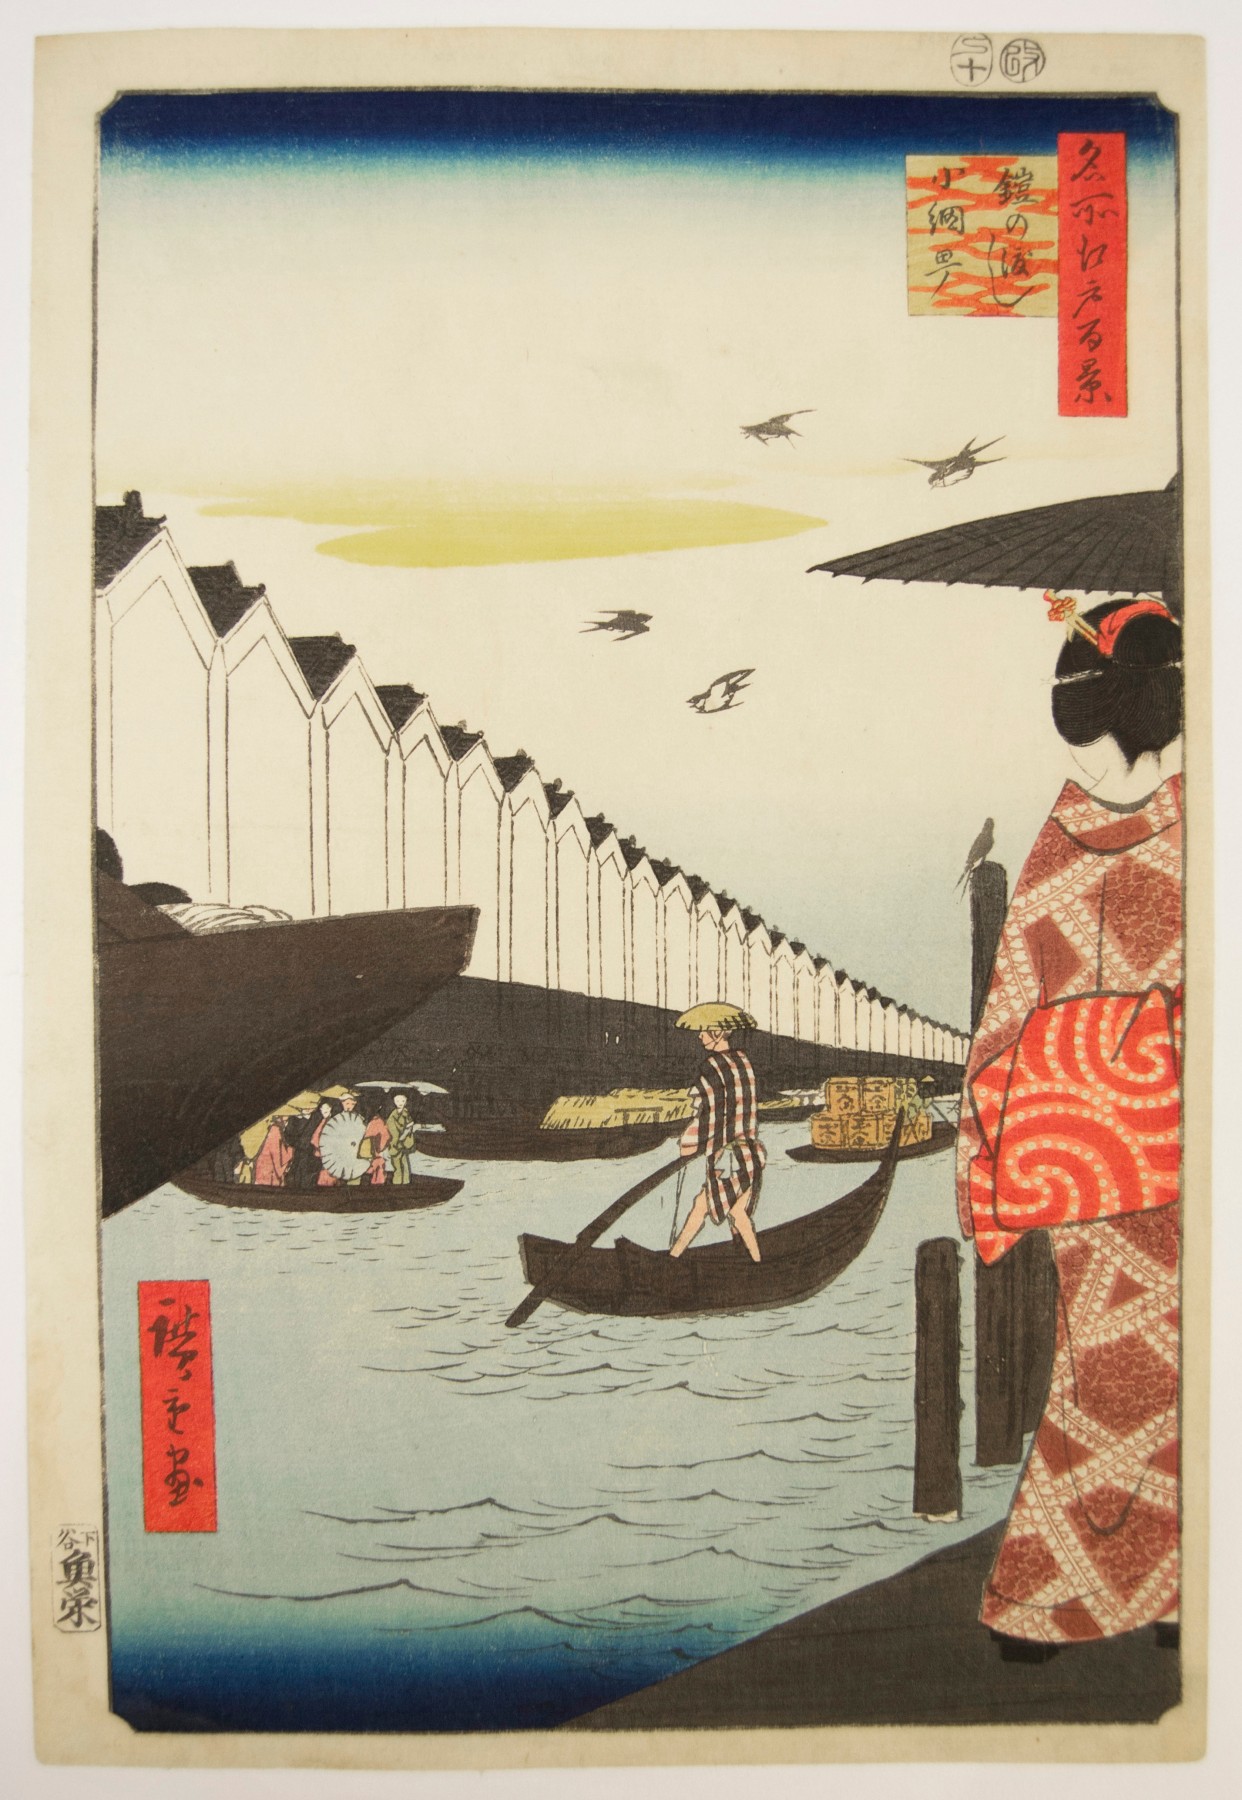 Utagawa Hiroshige (1797-1858), Yoroi Ferry, Koami-chō